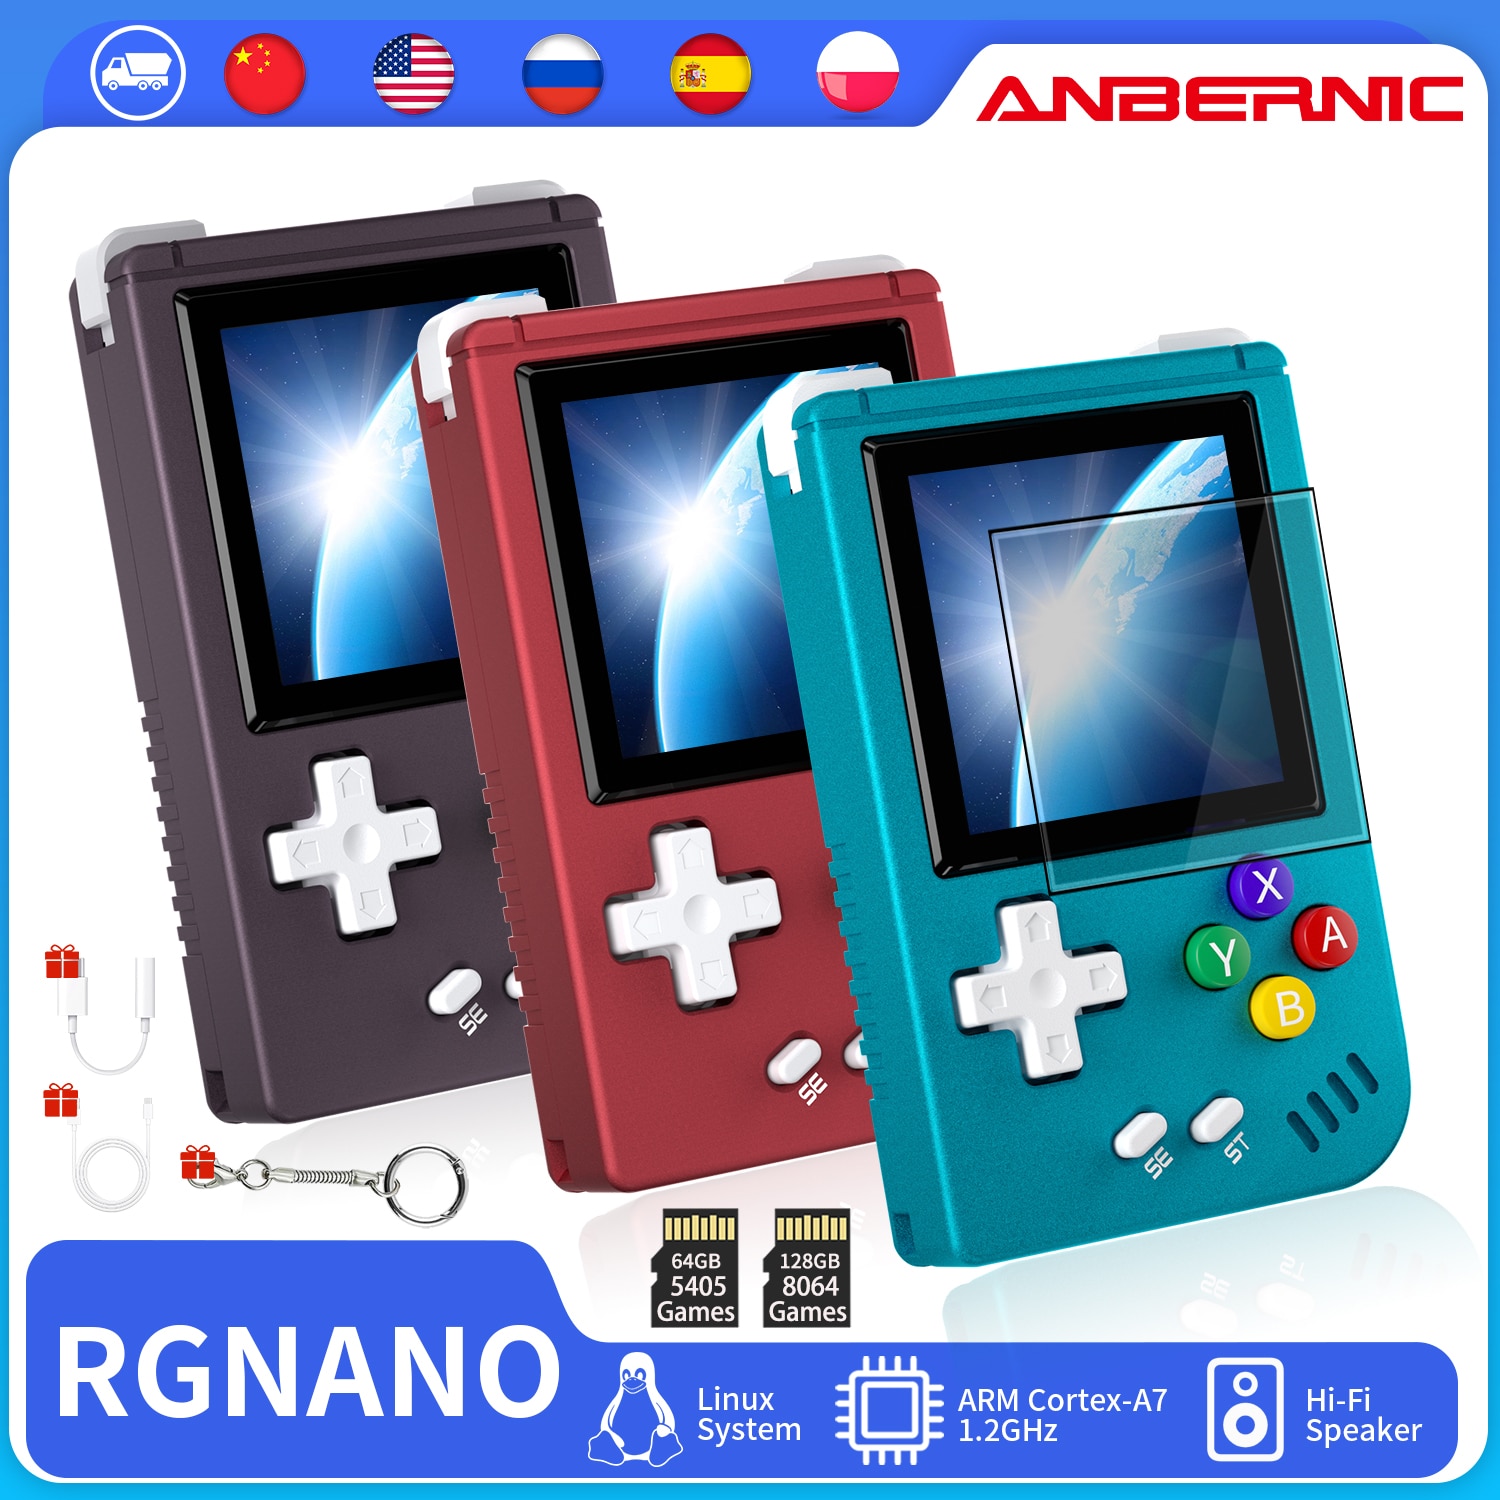 ANBERNIC-Mini consola de juegos portátil Retro RG Nano, pantalla IPS de 1,54 ", sistema Linux, reproductor portátil clásico, regalo para niños